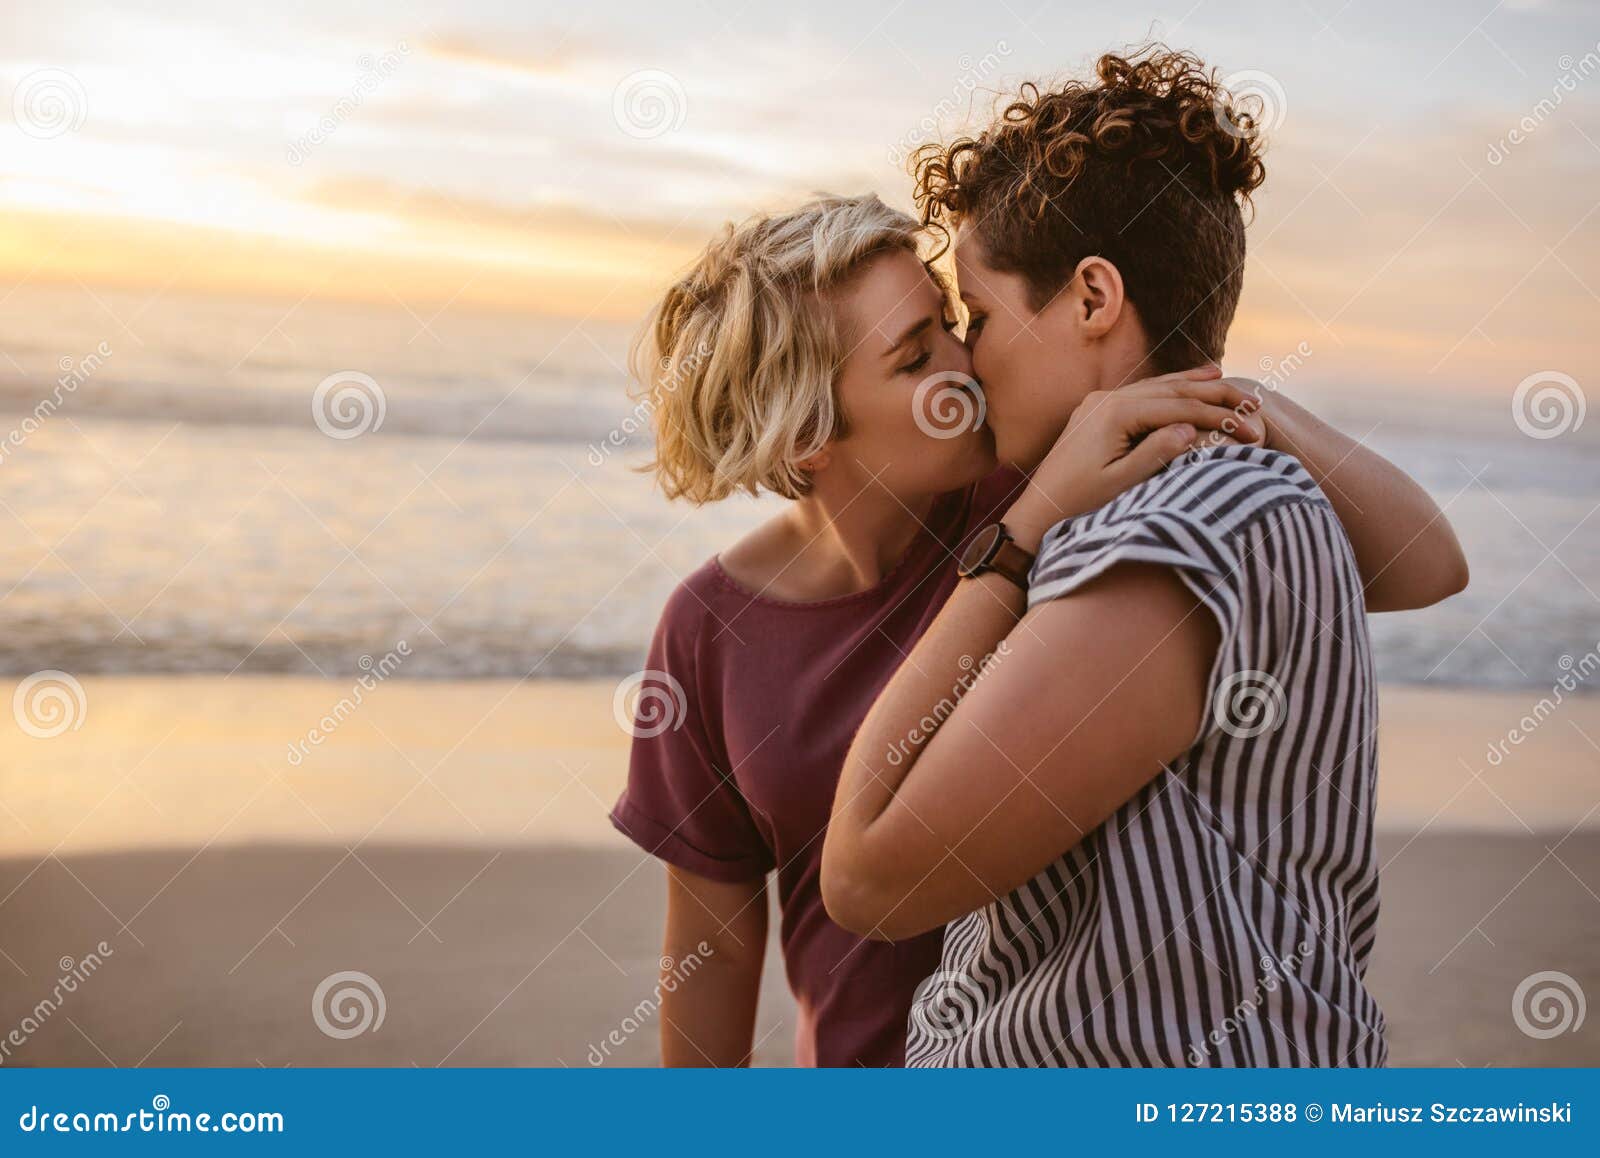 Lesbian Couple Kissing